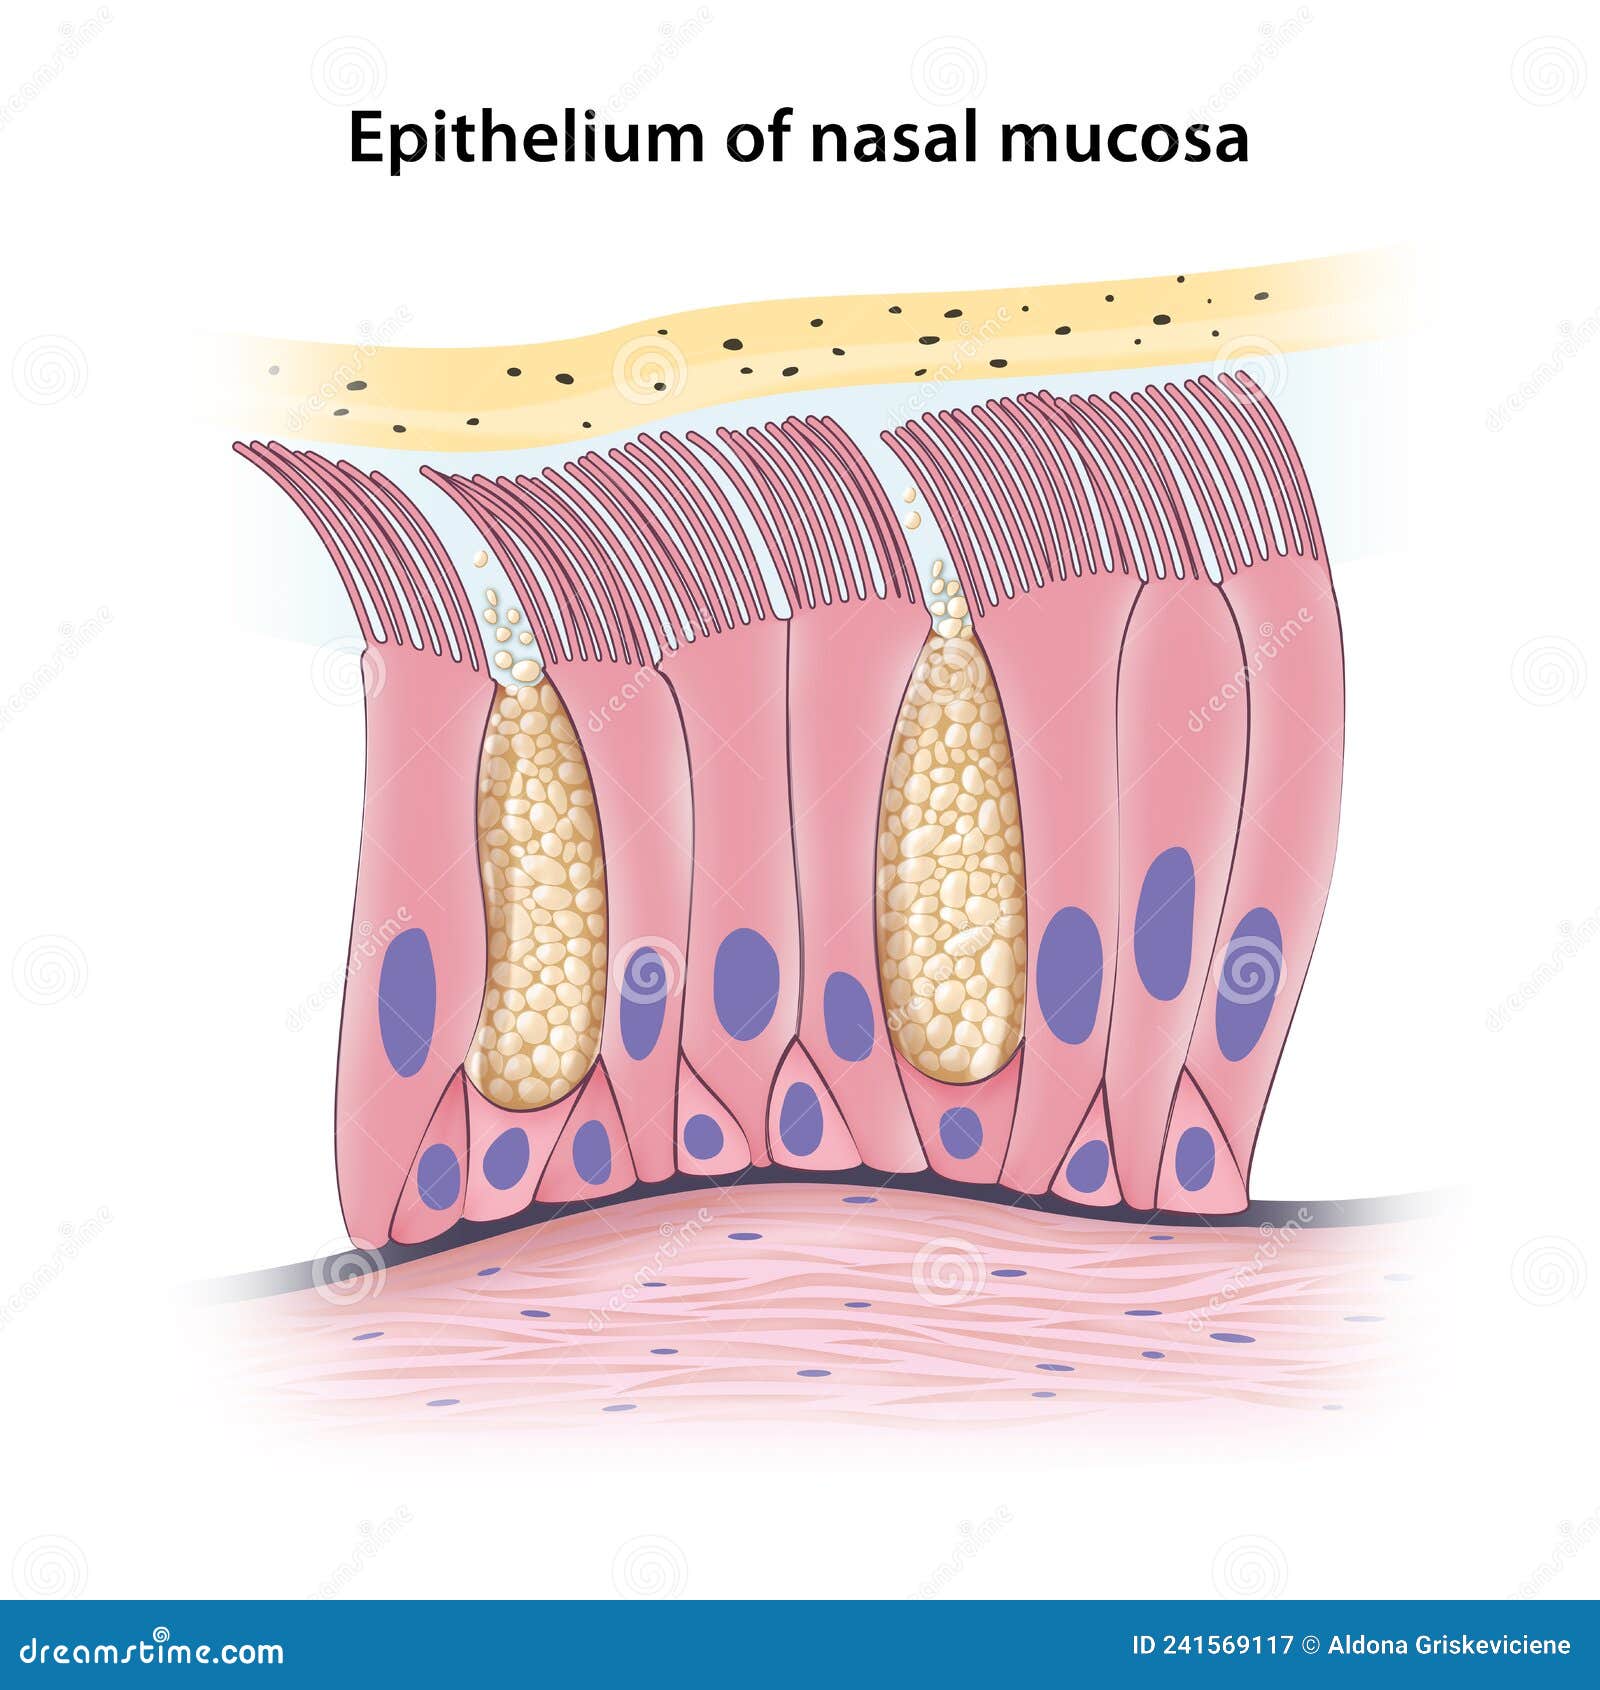 pseudostratified columnar epithelium of nasal mucosa